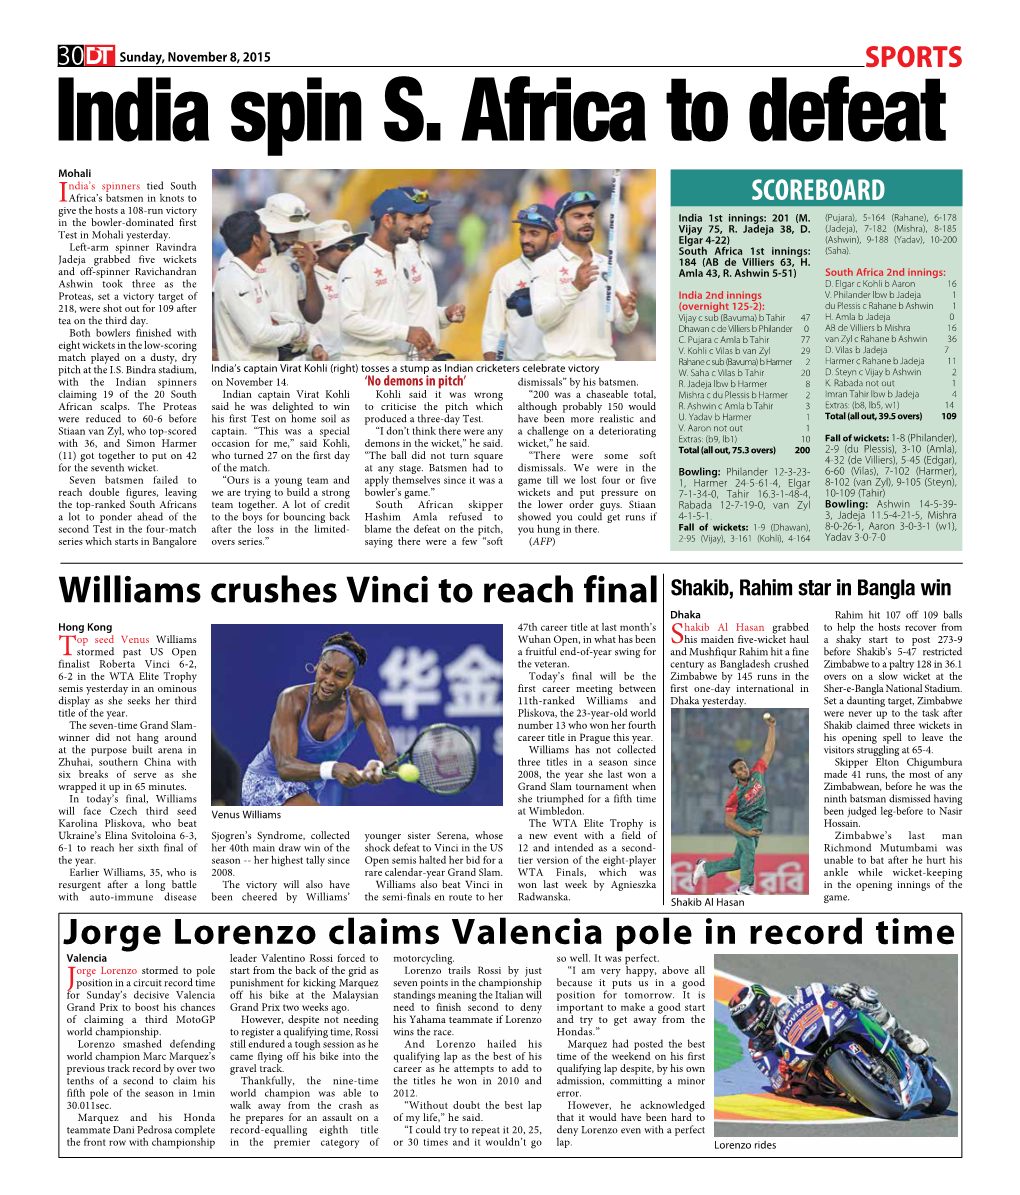 Williams Crushes Vinci to Reach Final